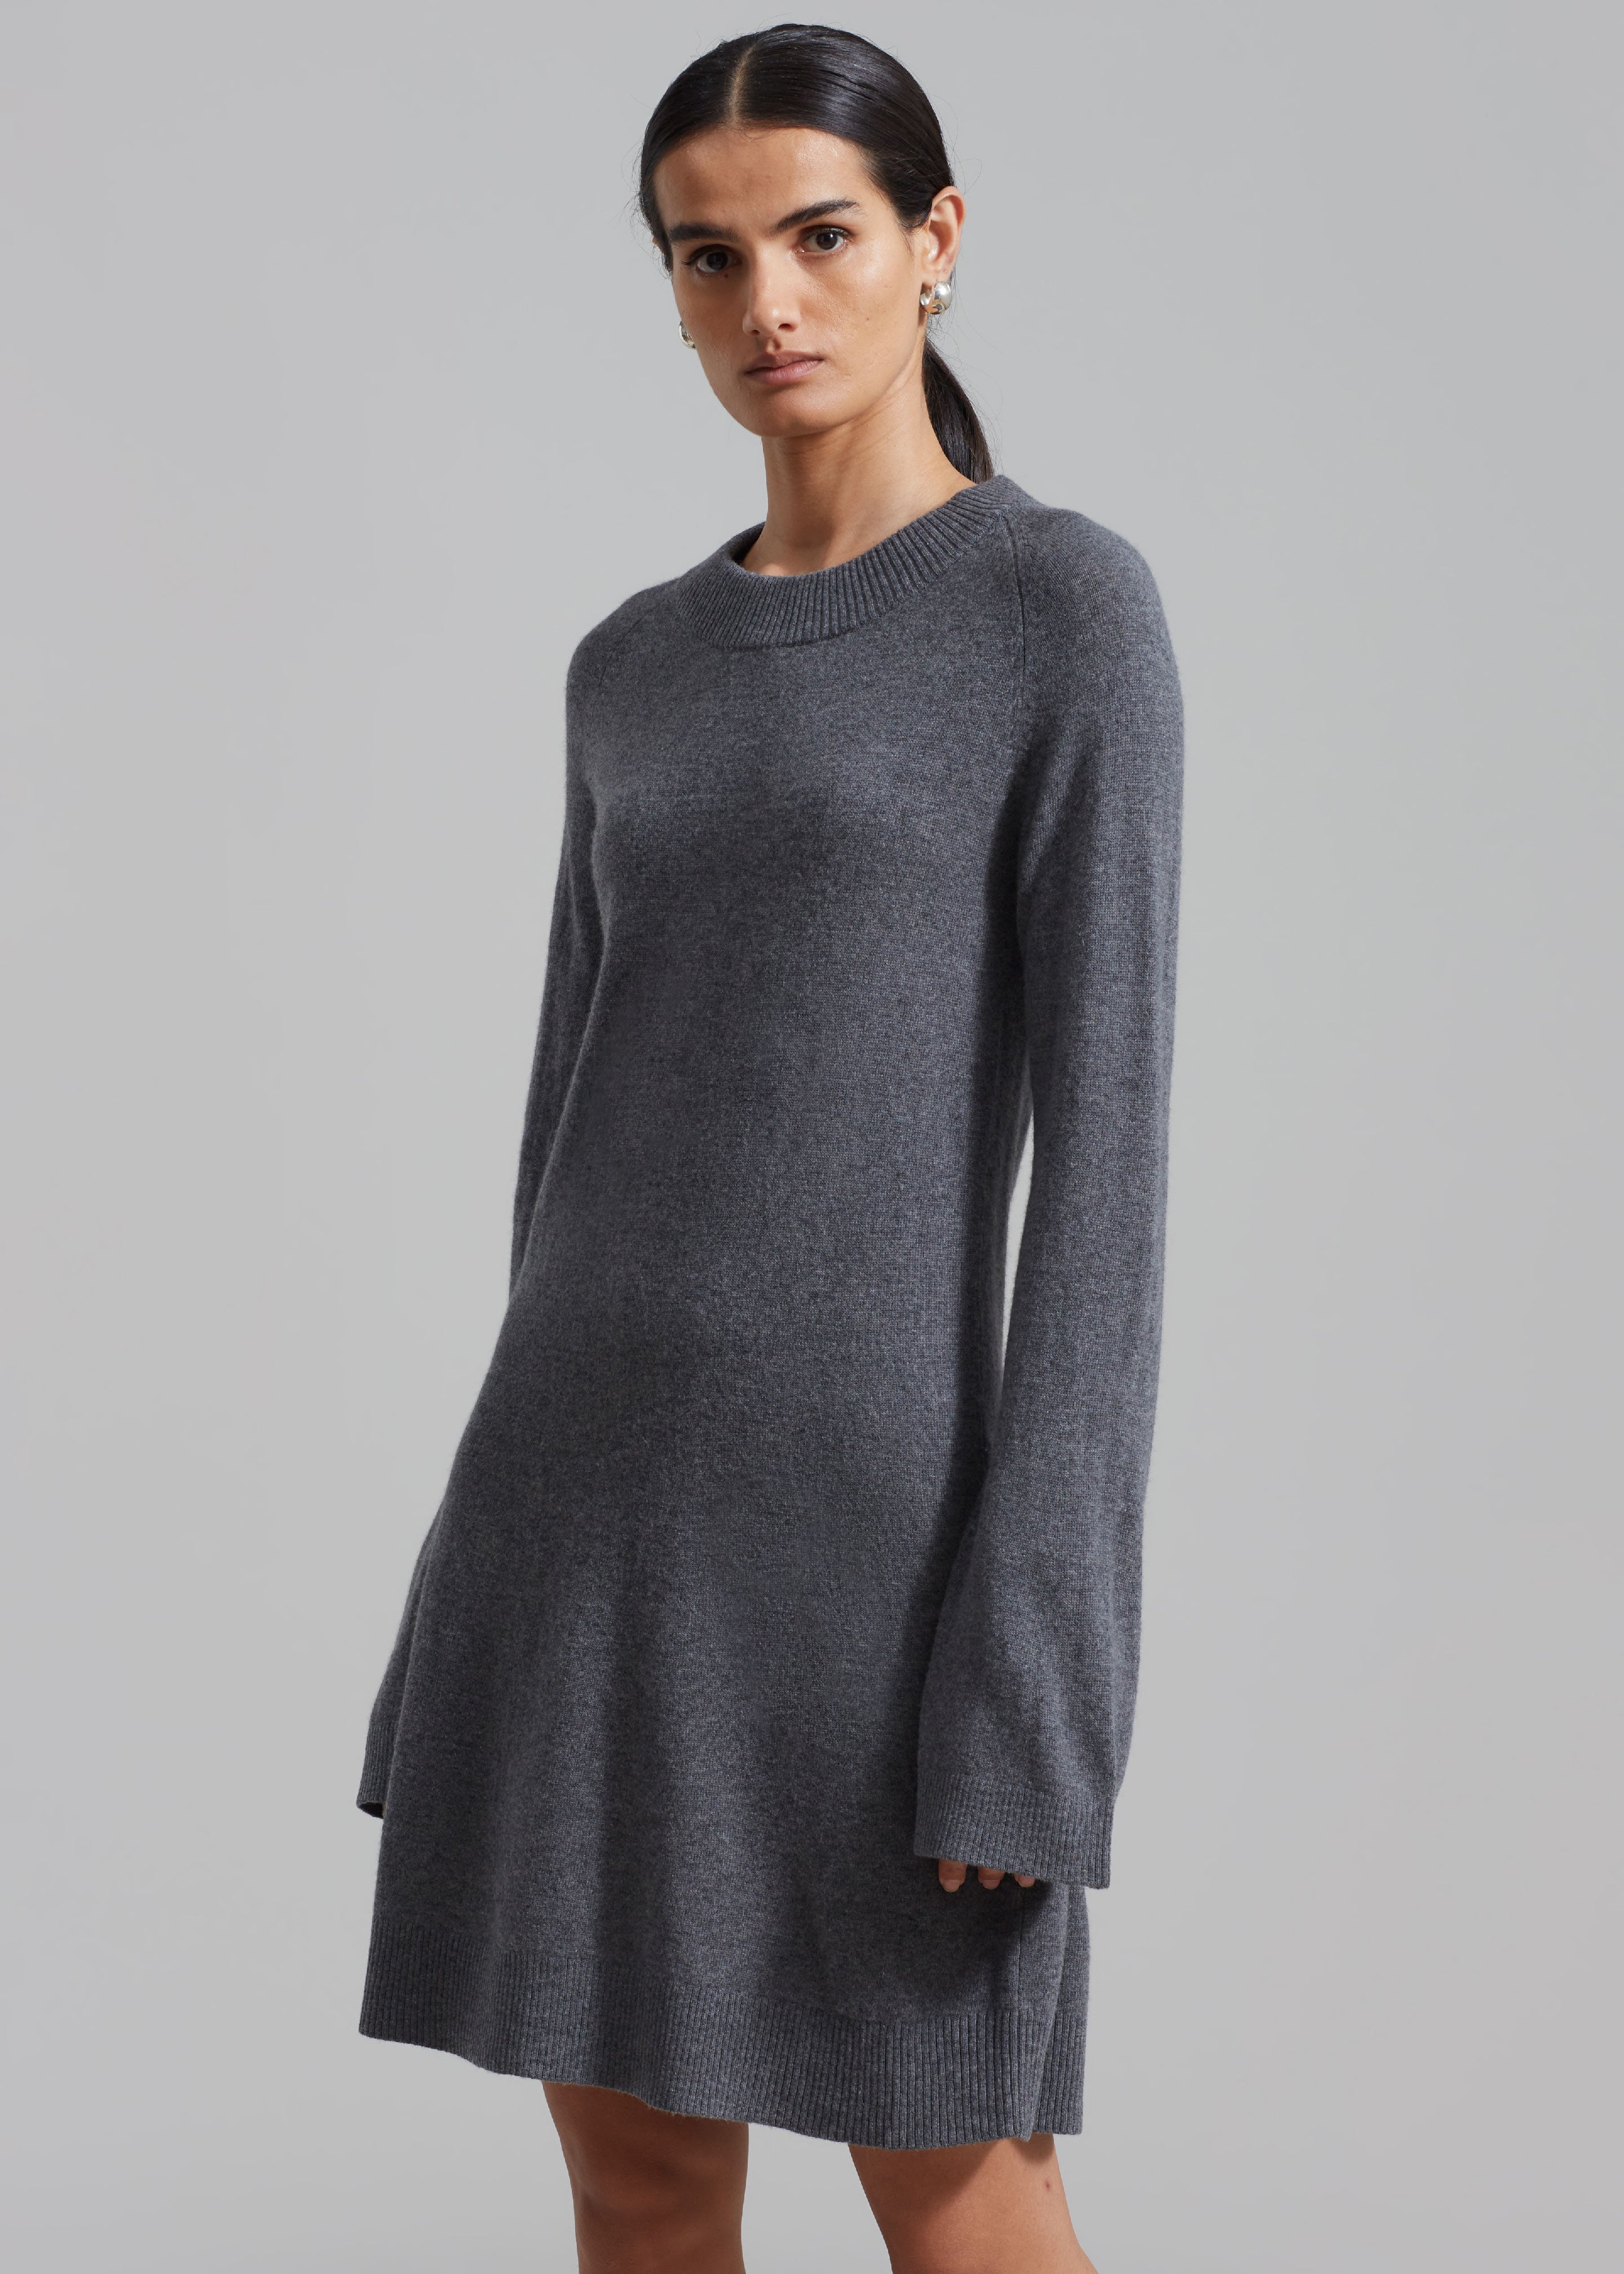 The Garment Como Raglan Dress - Grey Melange - 5